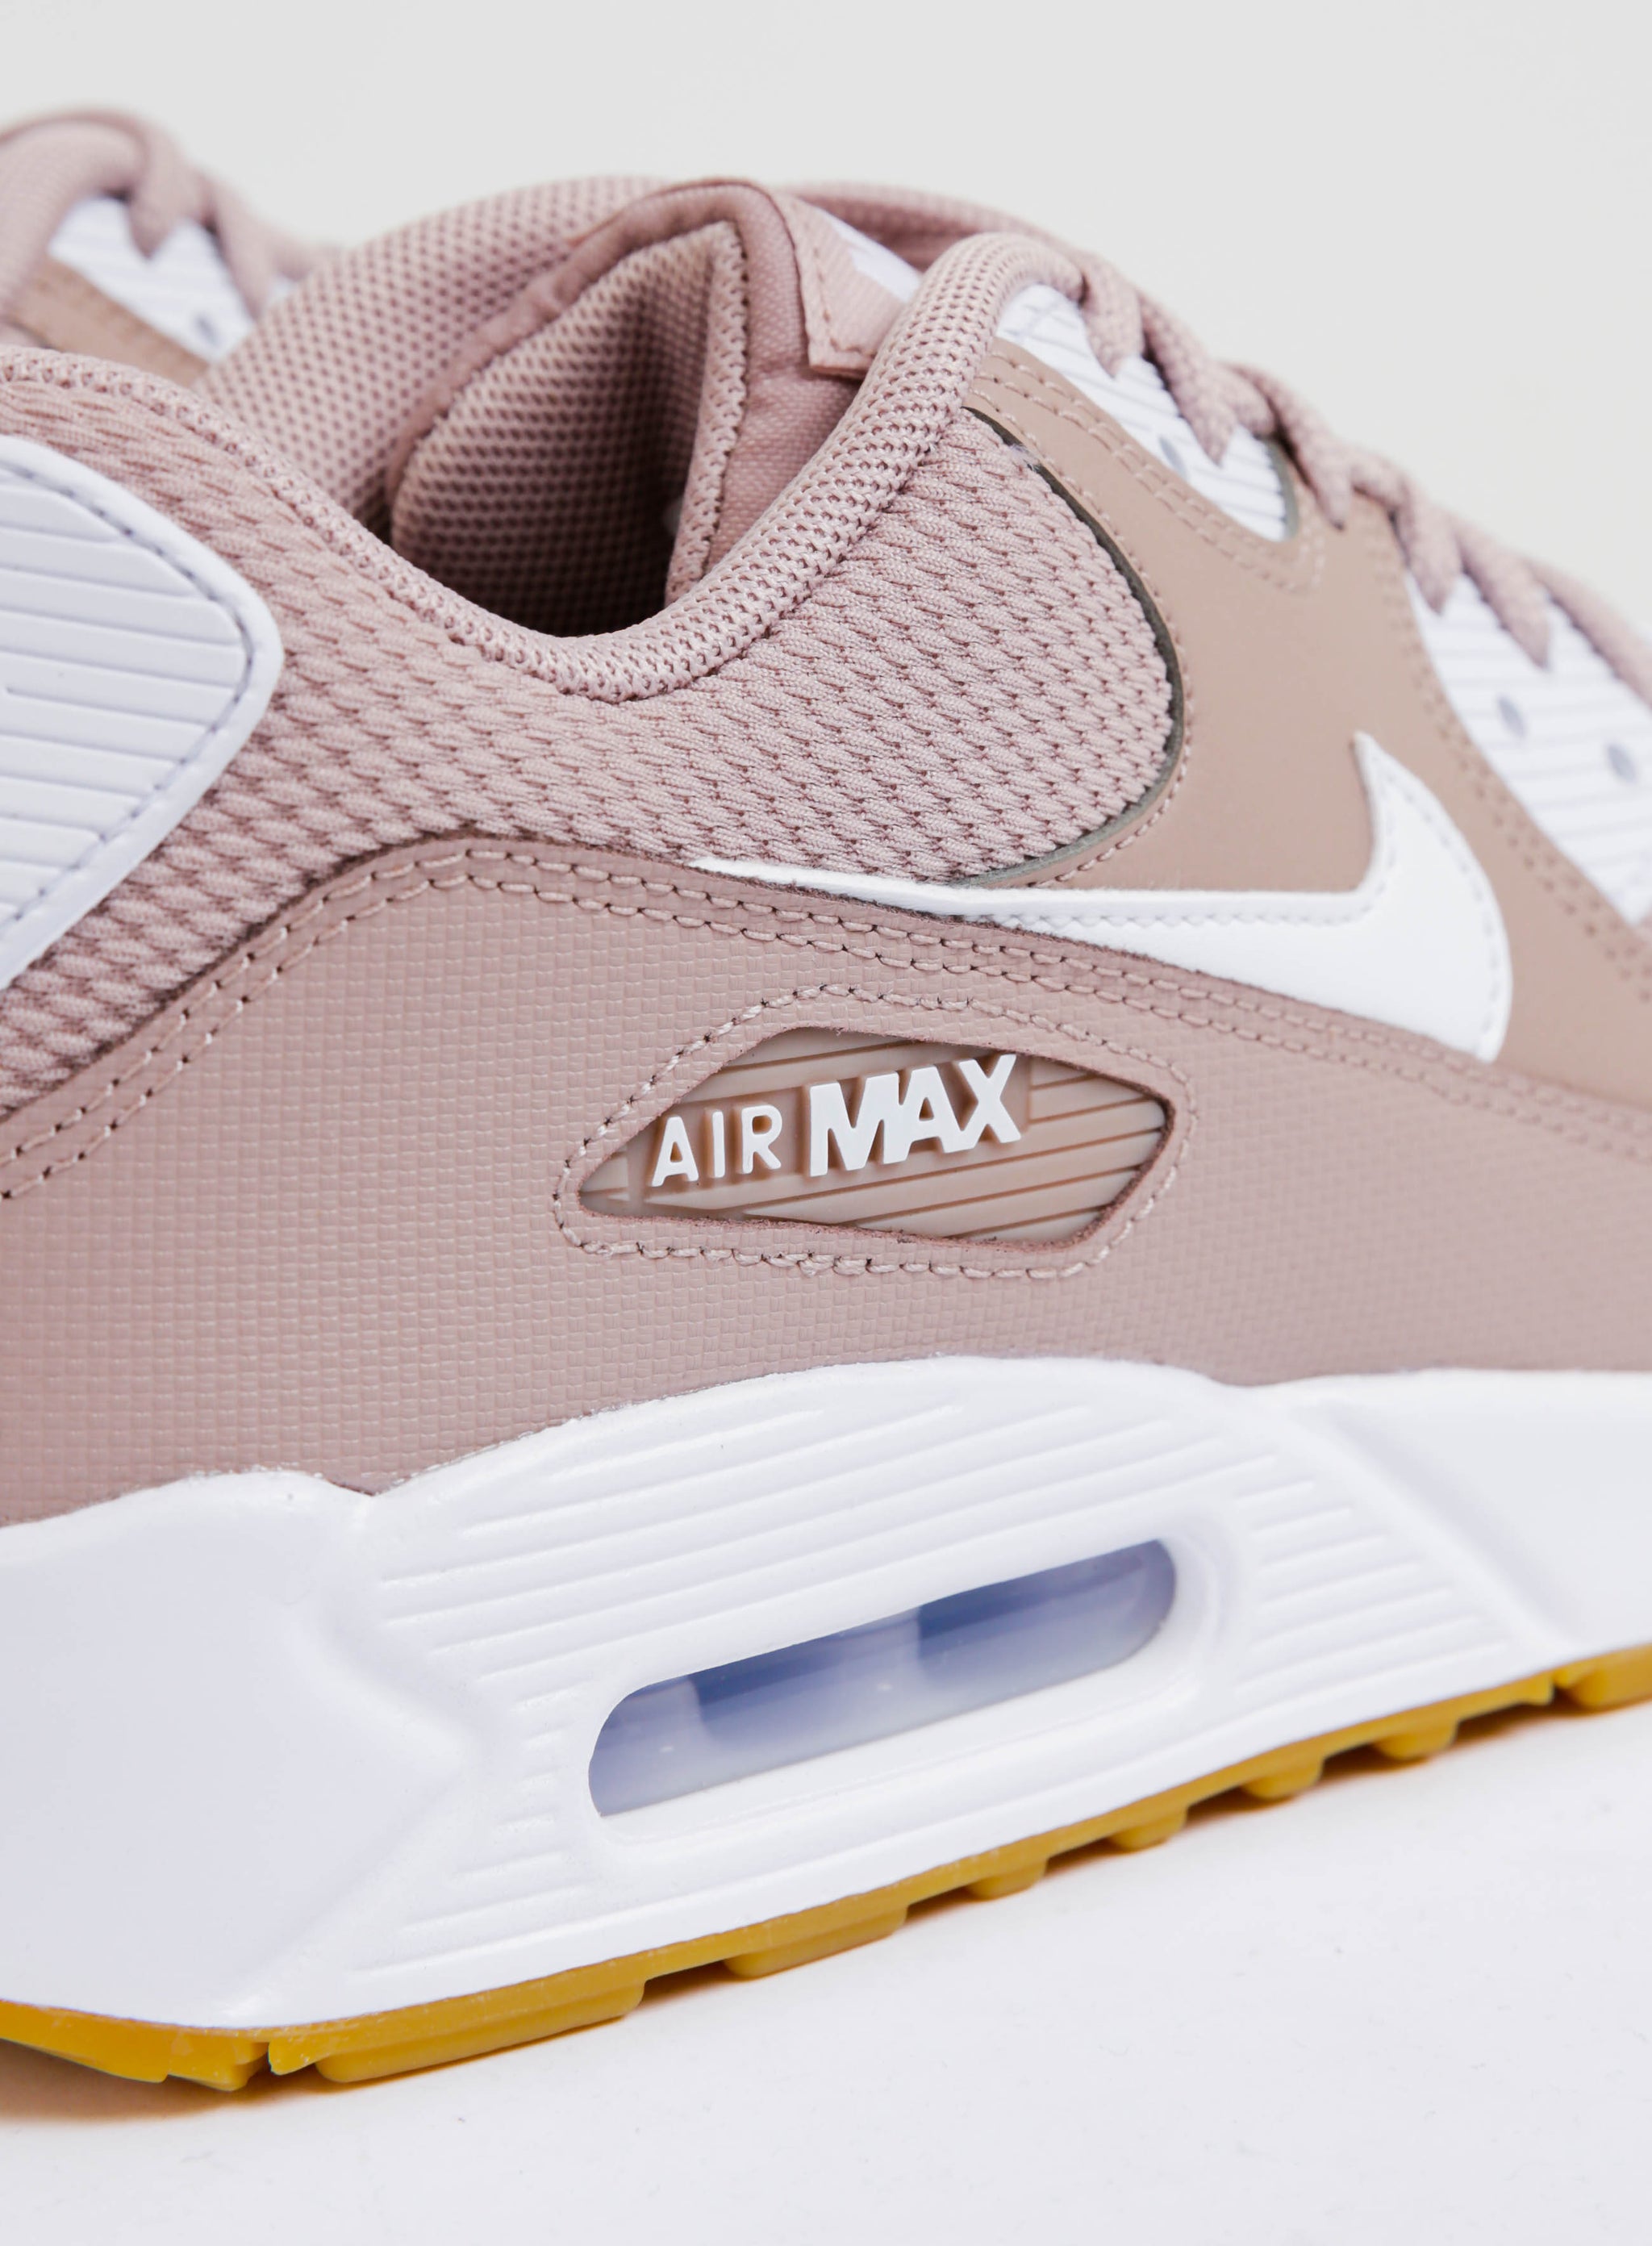 Womens Air Max 90 Sneakers in Taupe \u0026 